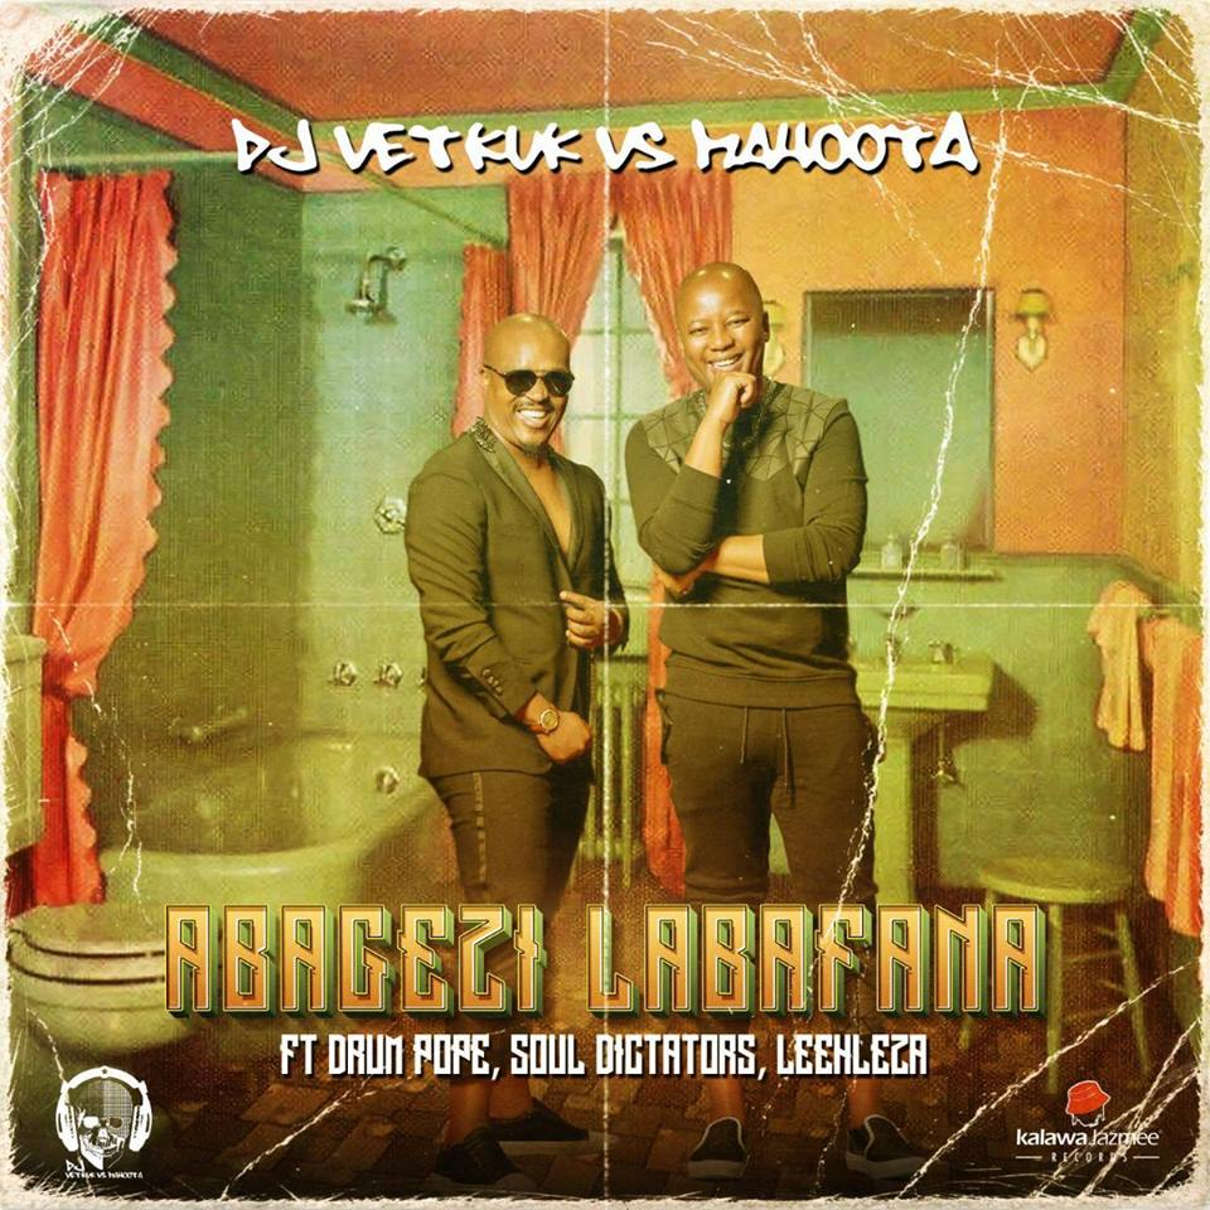 DJ Vetkuk vs Mahoota - Abagezi Labafana (ft. Leehleza, Soul Dictators & Drum Pope)